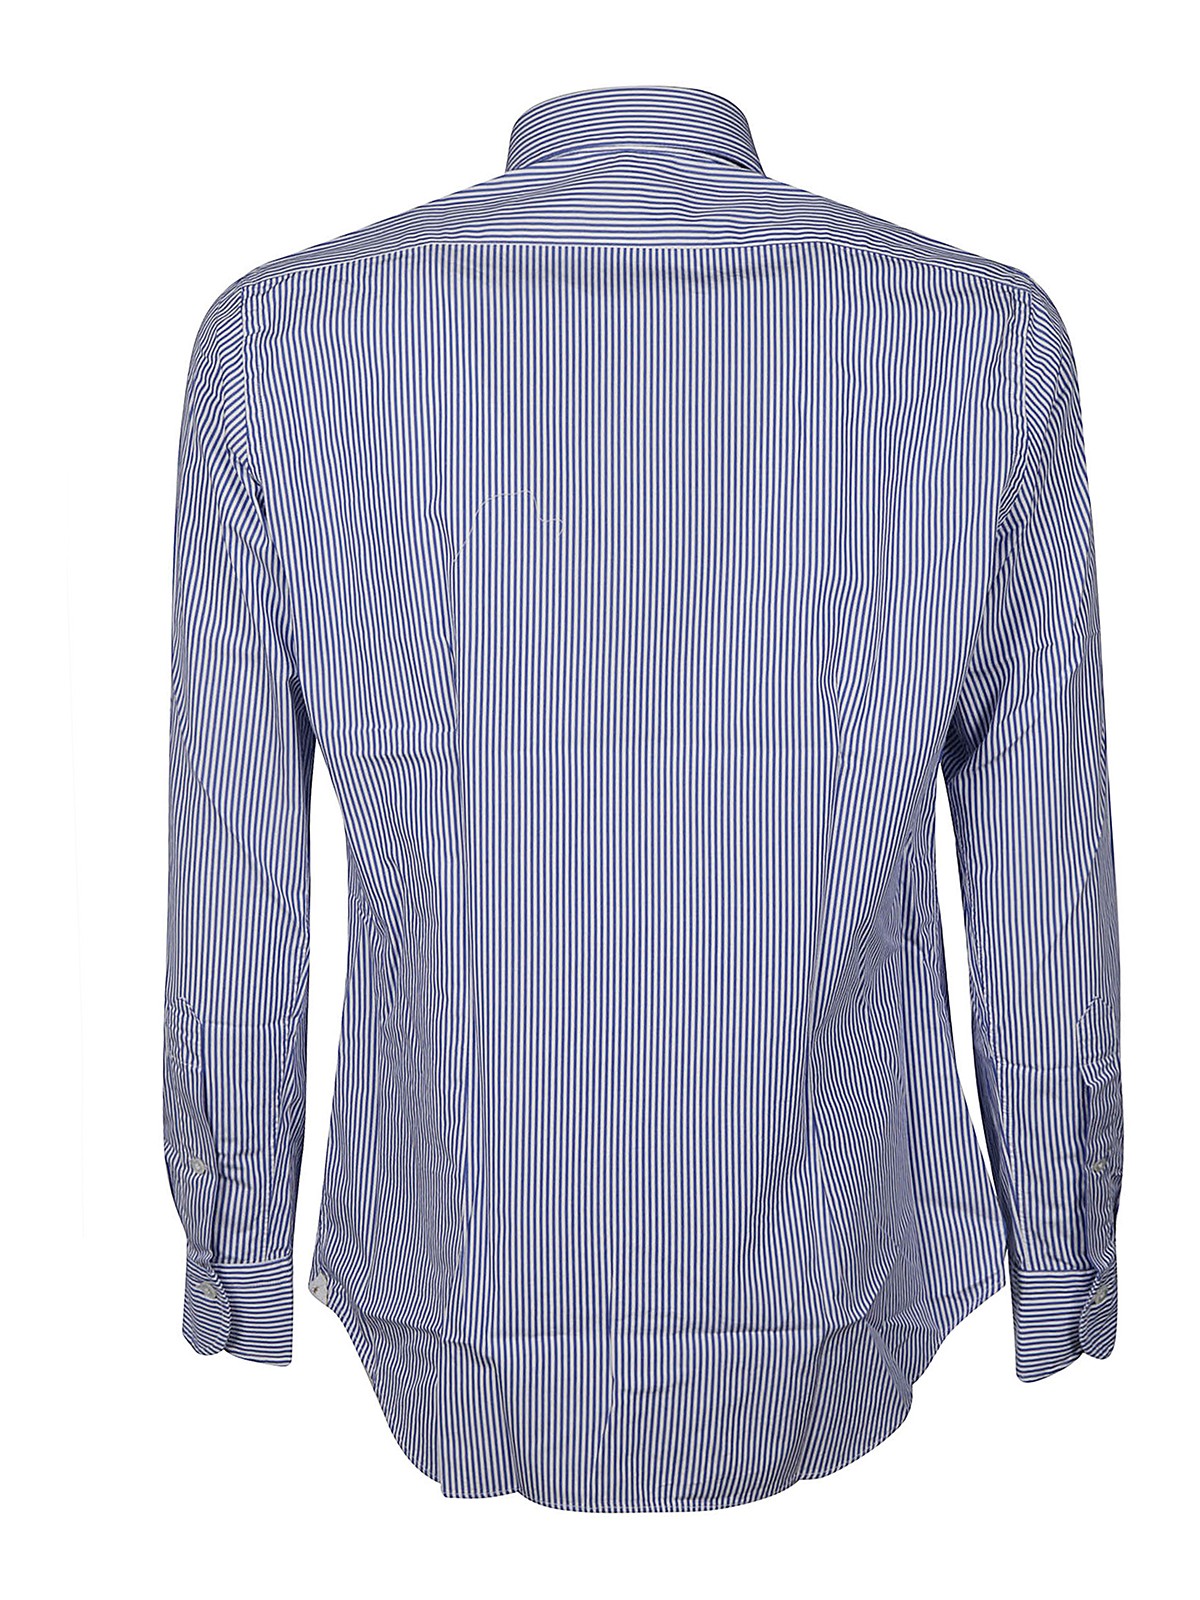 Shirts Bagutta - Walter striped cotton shirt - WALTEREBLWCN0010251